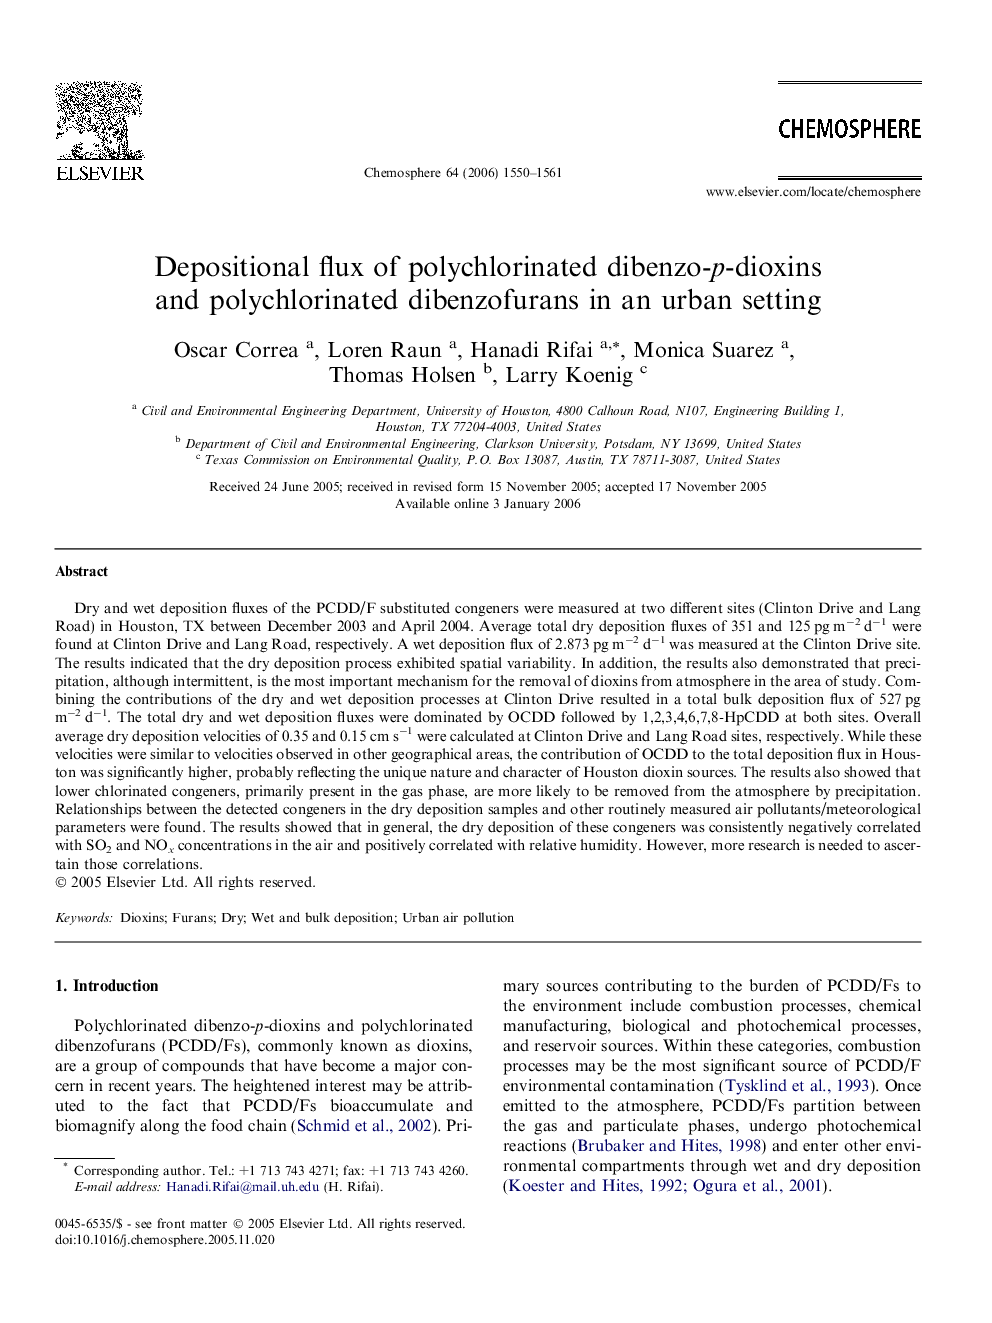 Depositional flux of polychlorinated dibenzo-p-dioxins and polychlorinated dibenzofurans in an urban setting